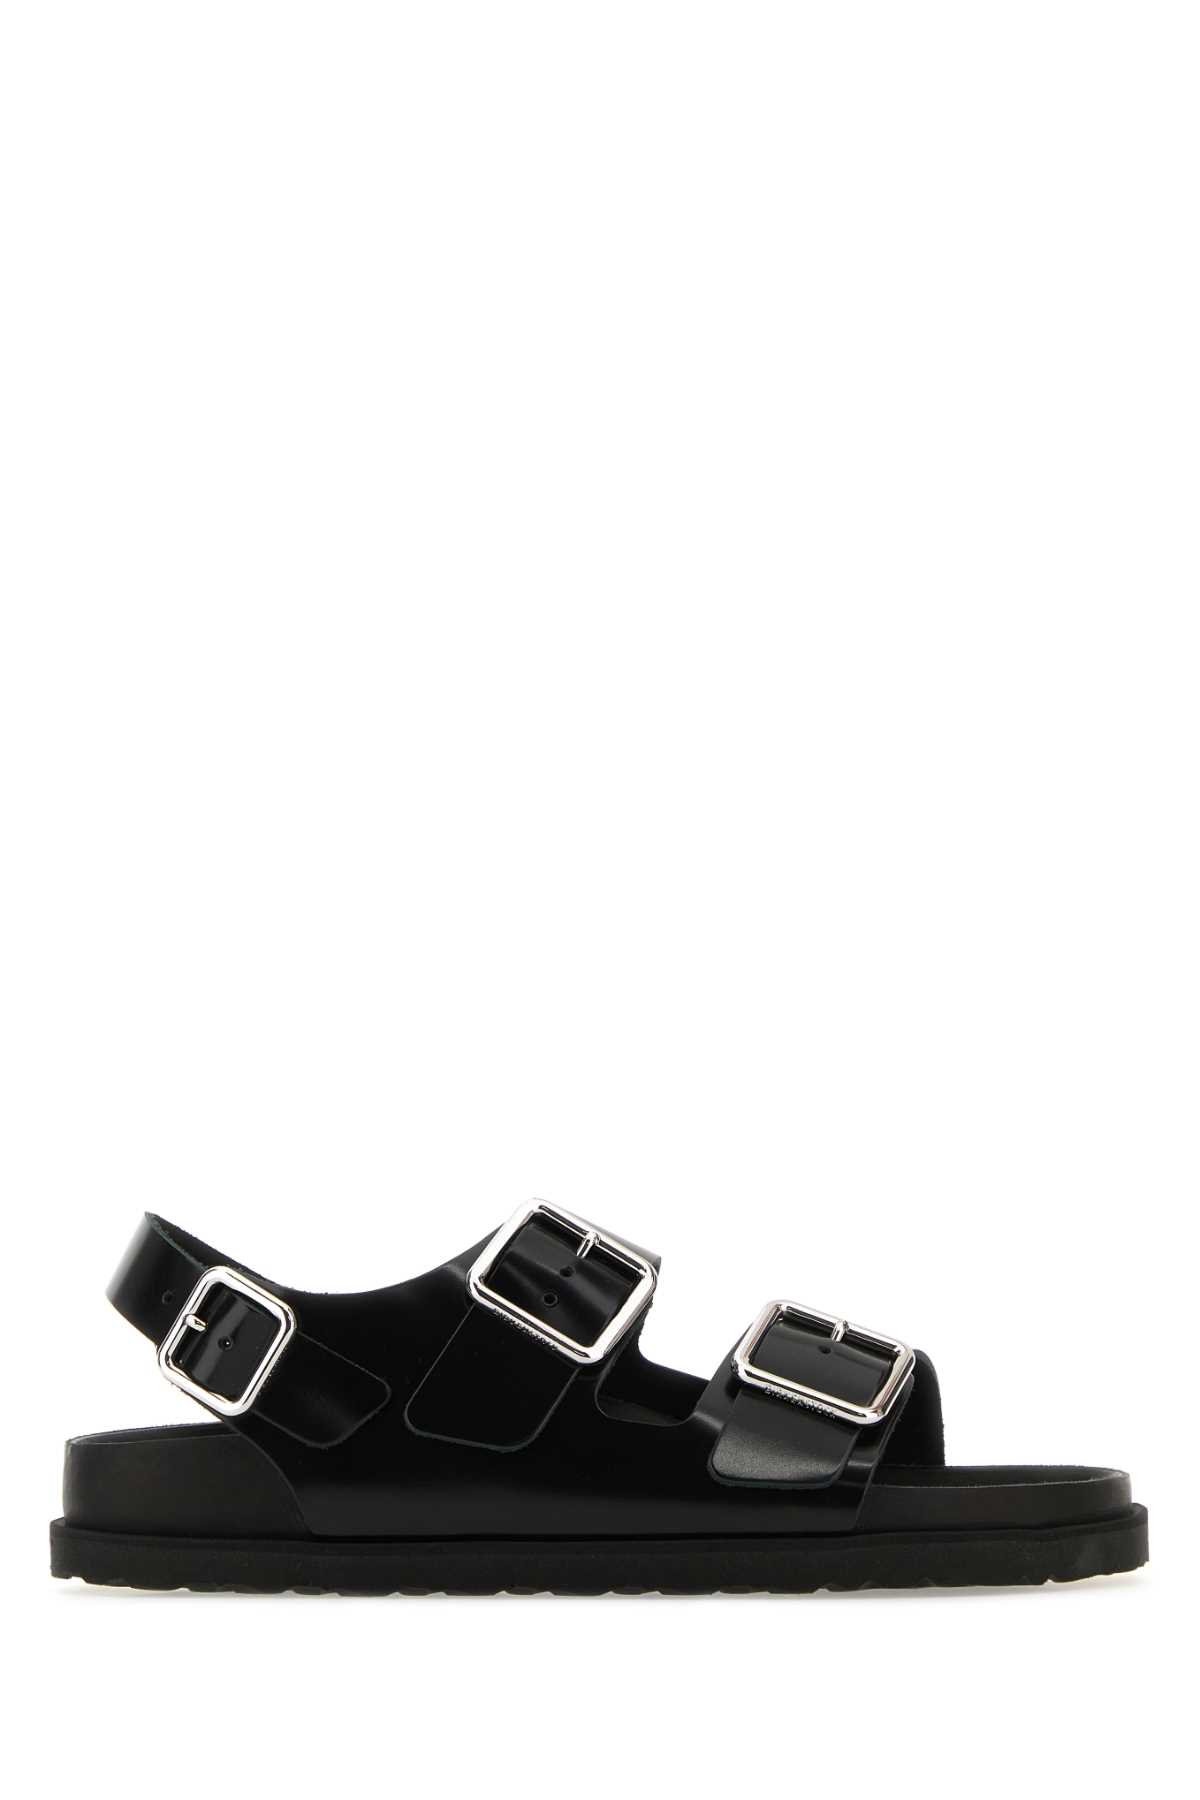 Black Leather Milano Avantgarde Sandals